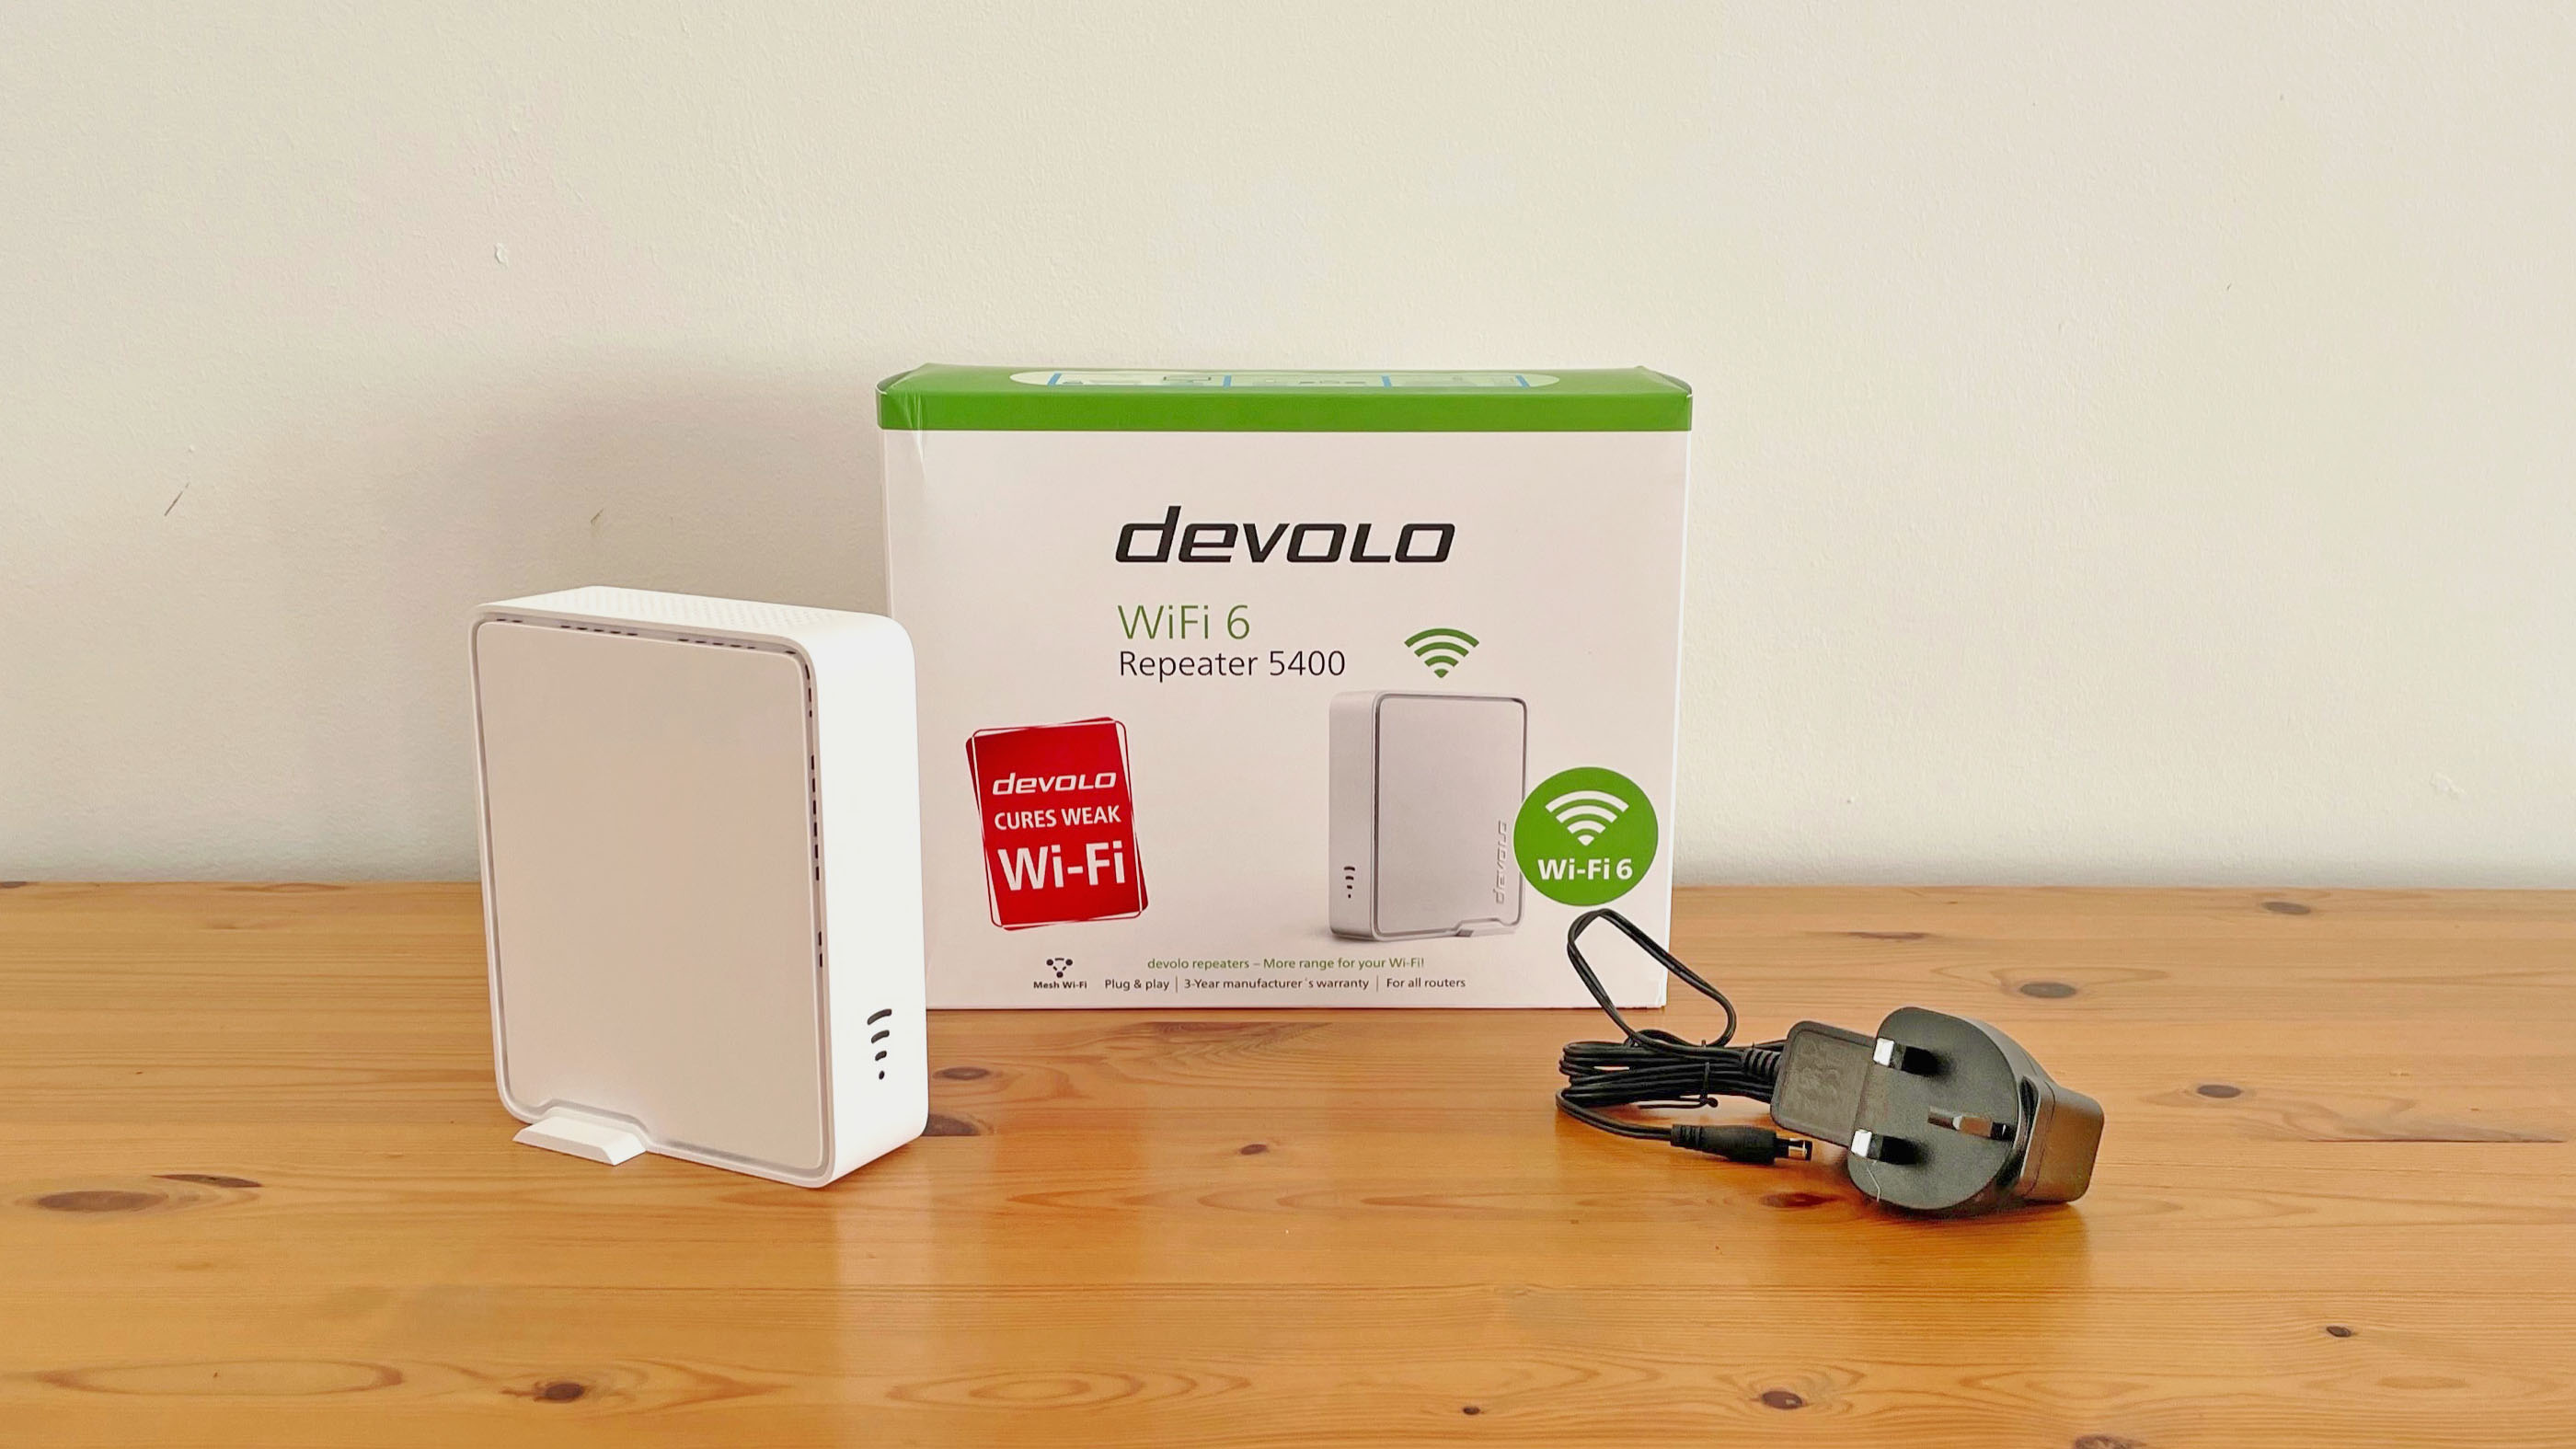 Devolo WiFi 6 Repeater 5400 on a table